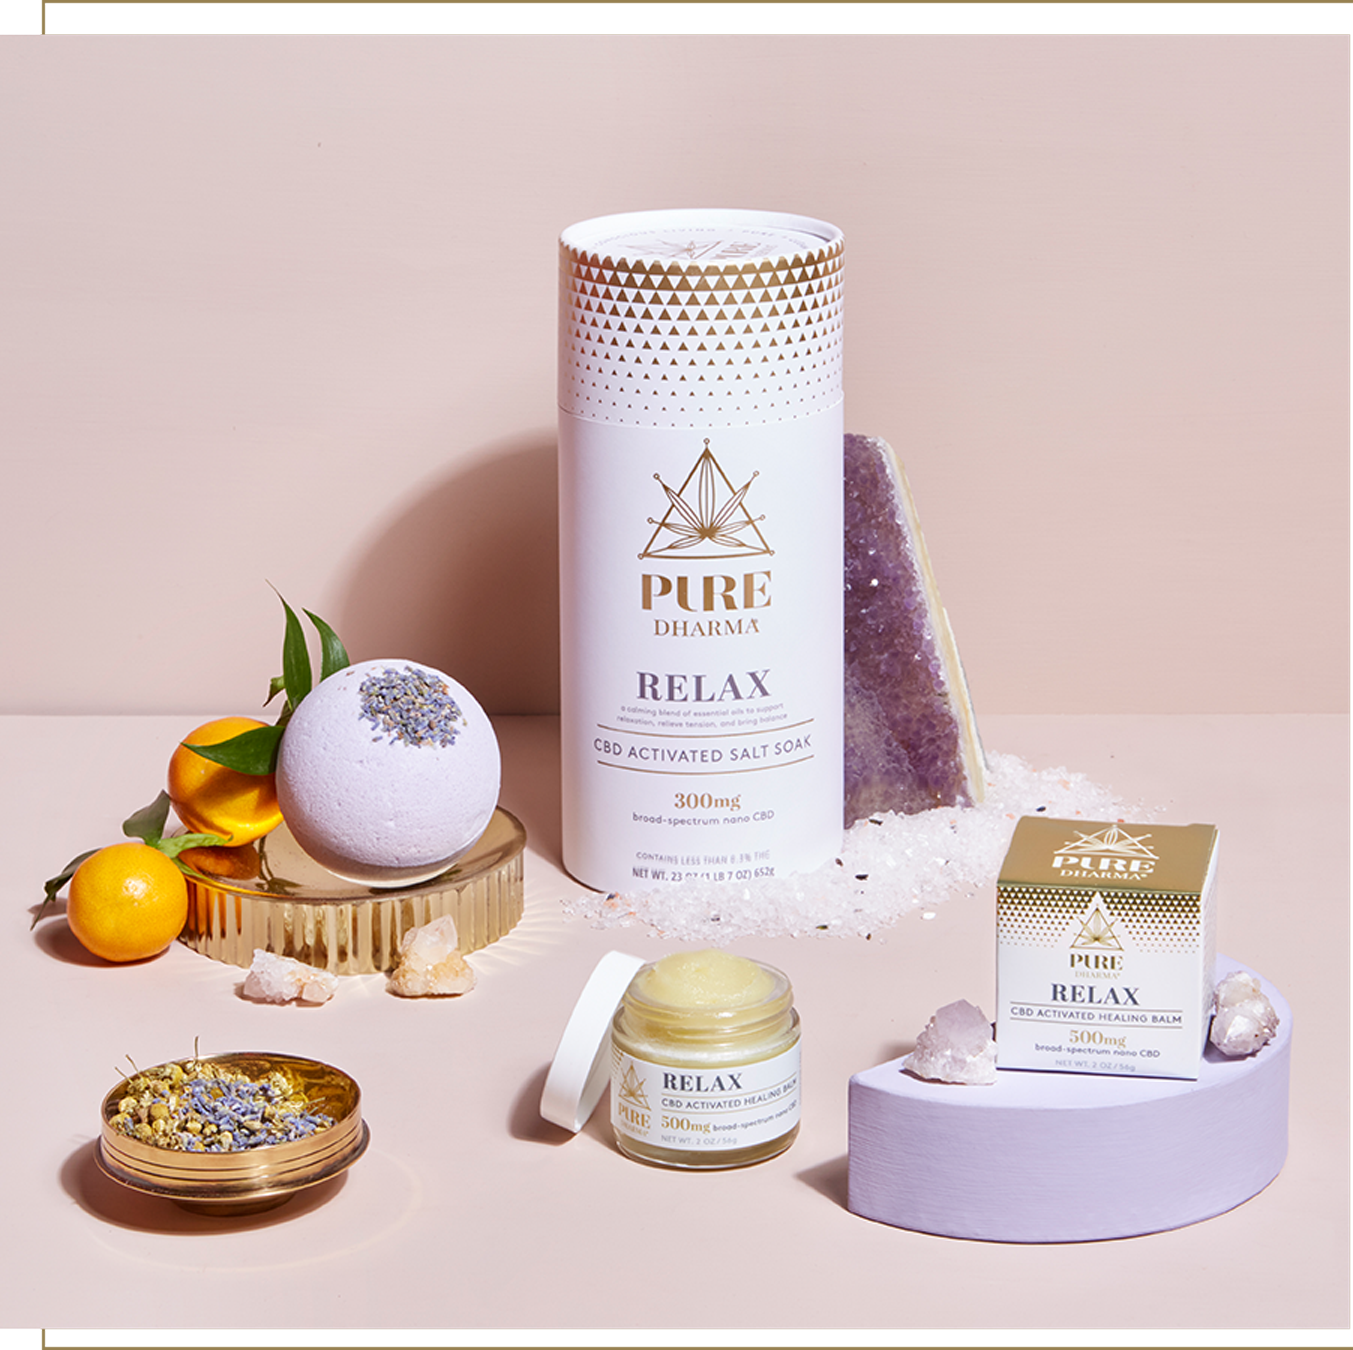 Image Showcasing Pure Dharma Relax Salt Soak, Healing Balm, and Bath Fizz